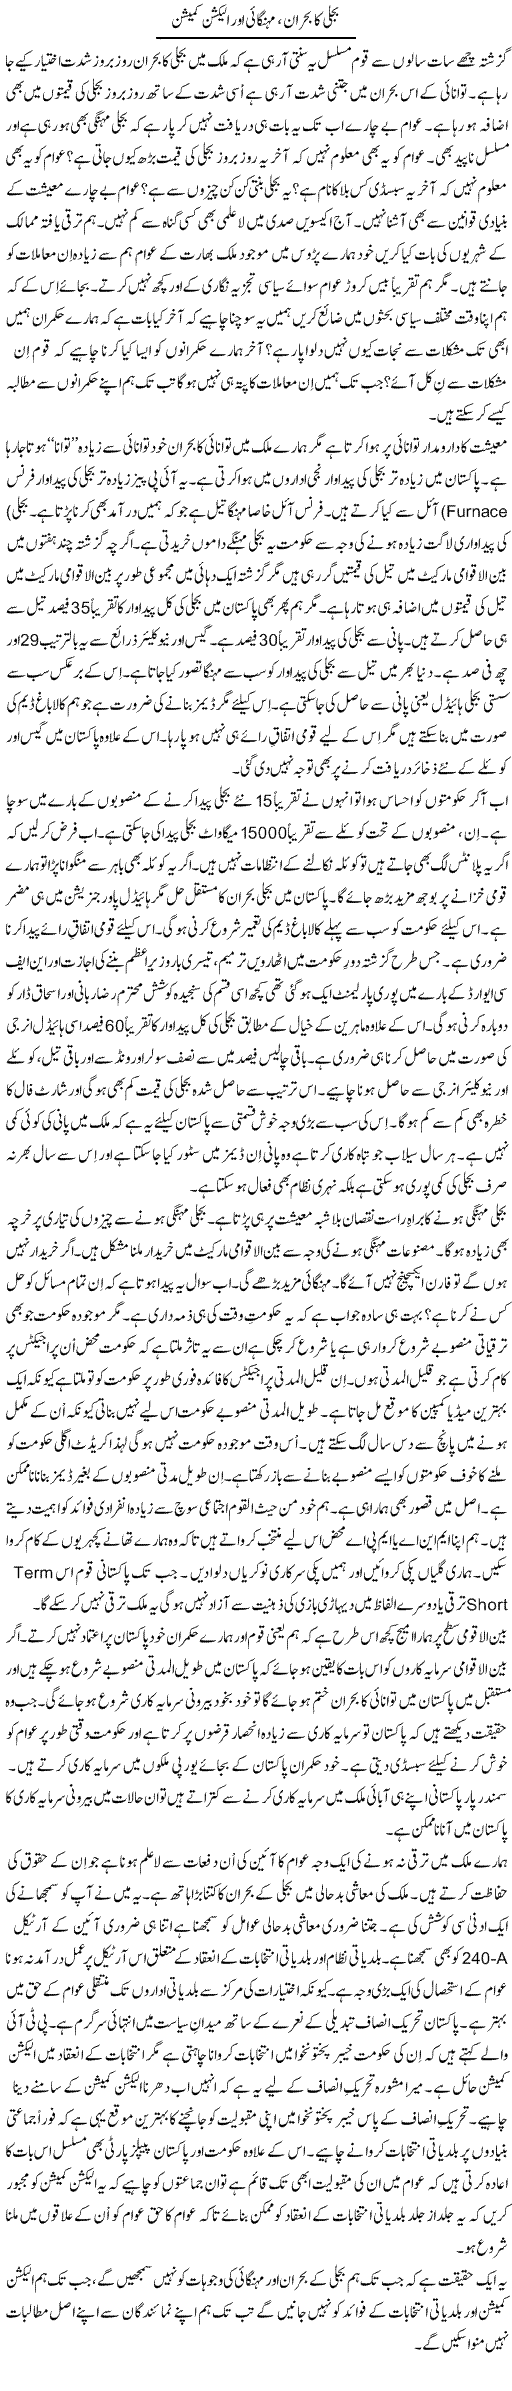 Bijli Ka Bohran, Mehangai Our Election Comission | Syed Zeeshan Haider | Daily Urdu Columns